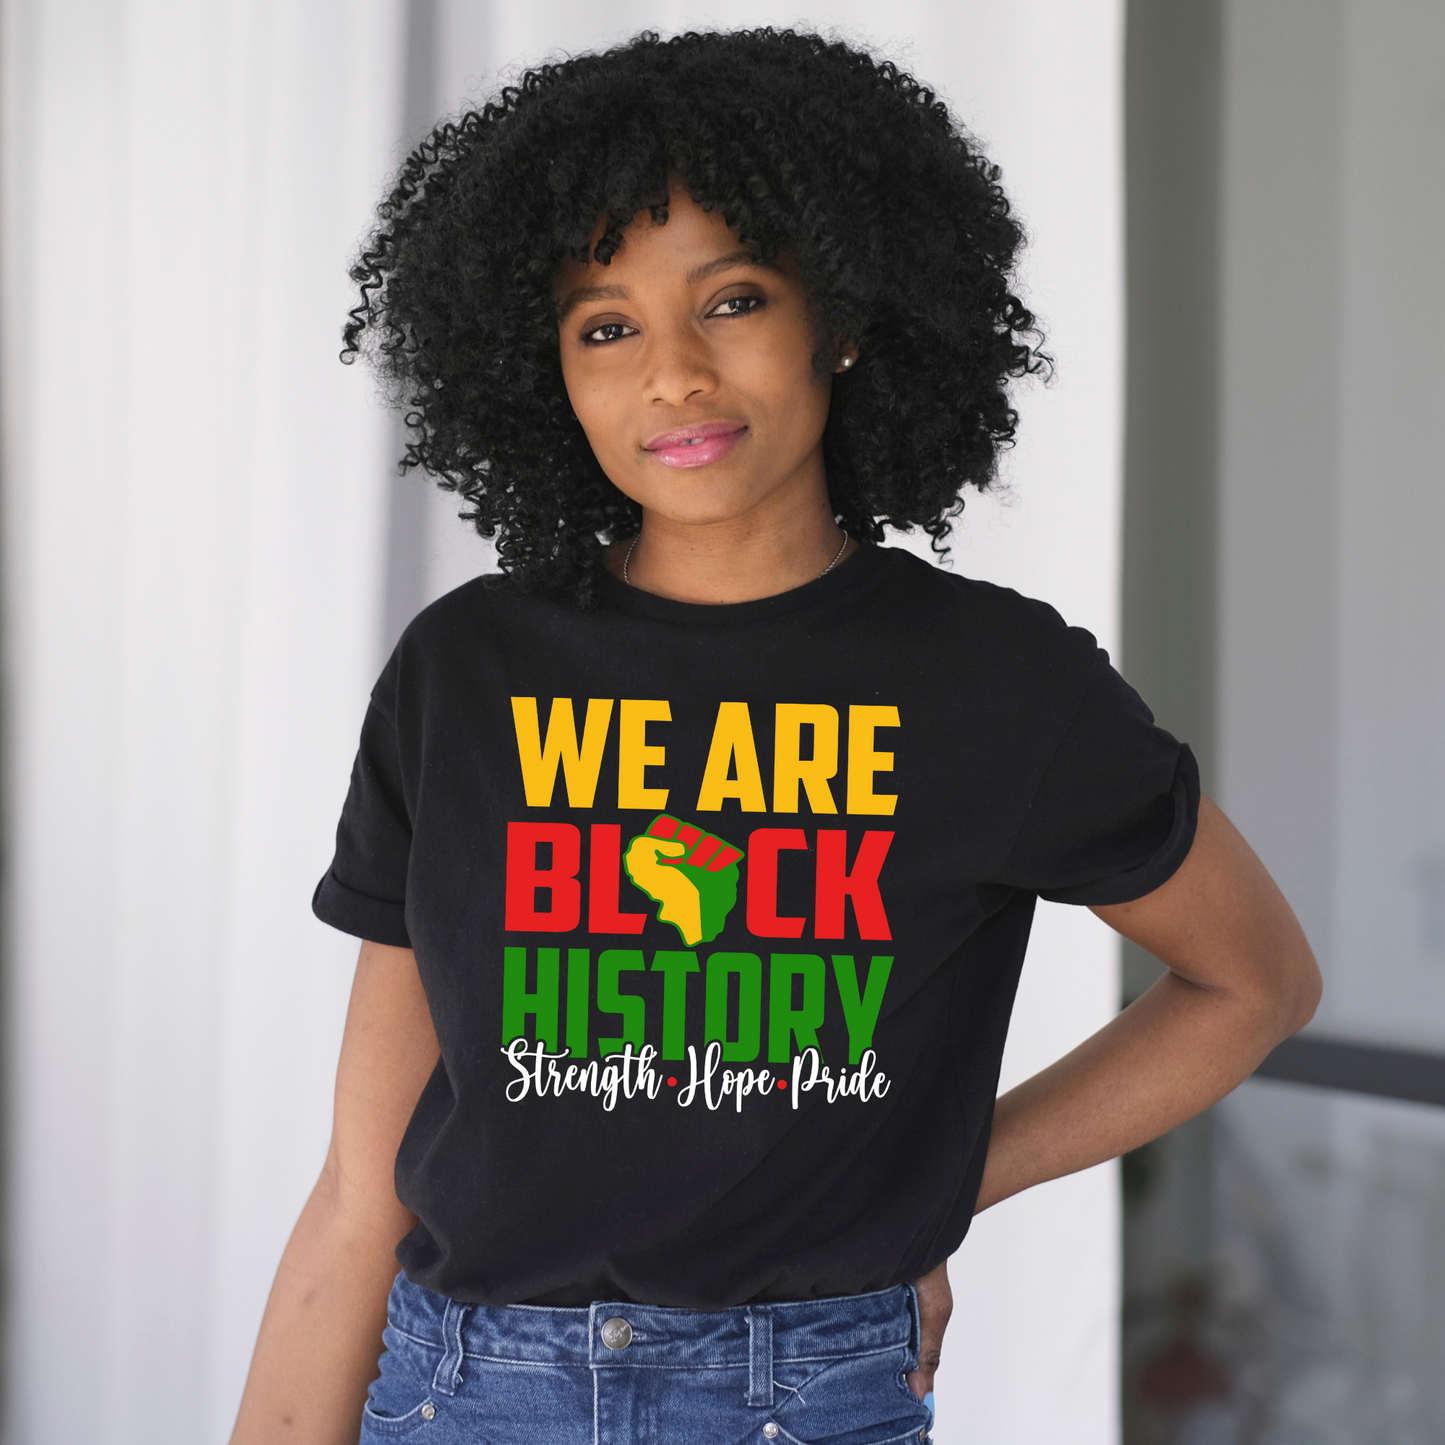 We Are BLACK HISTORY Women's T-Shirt